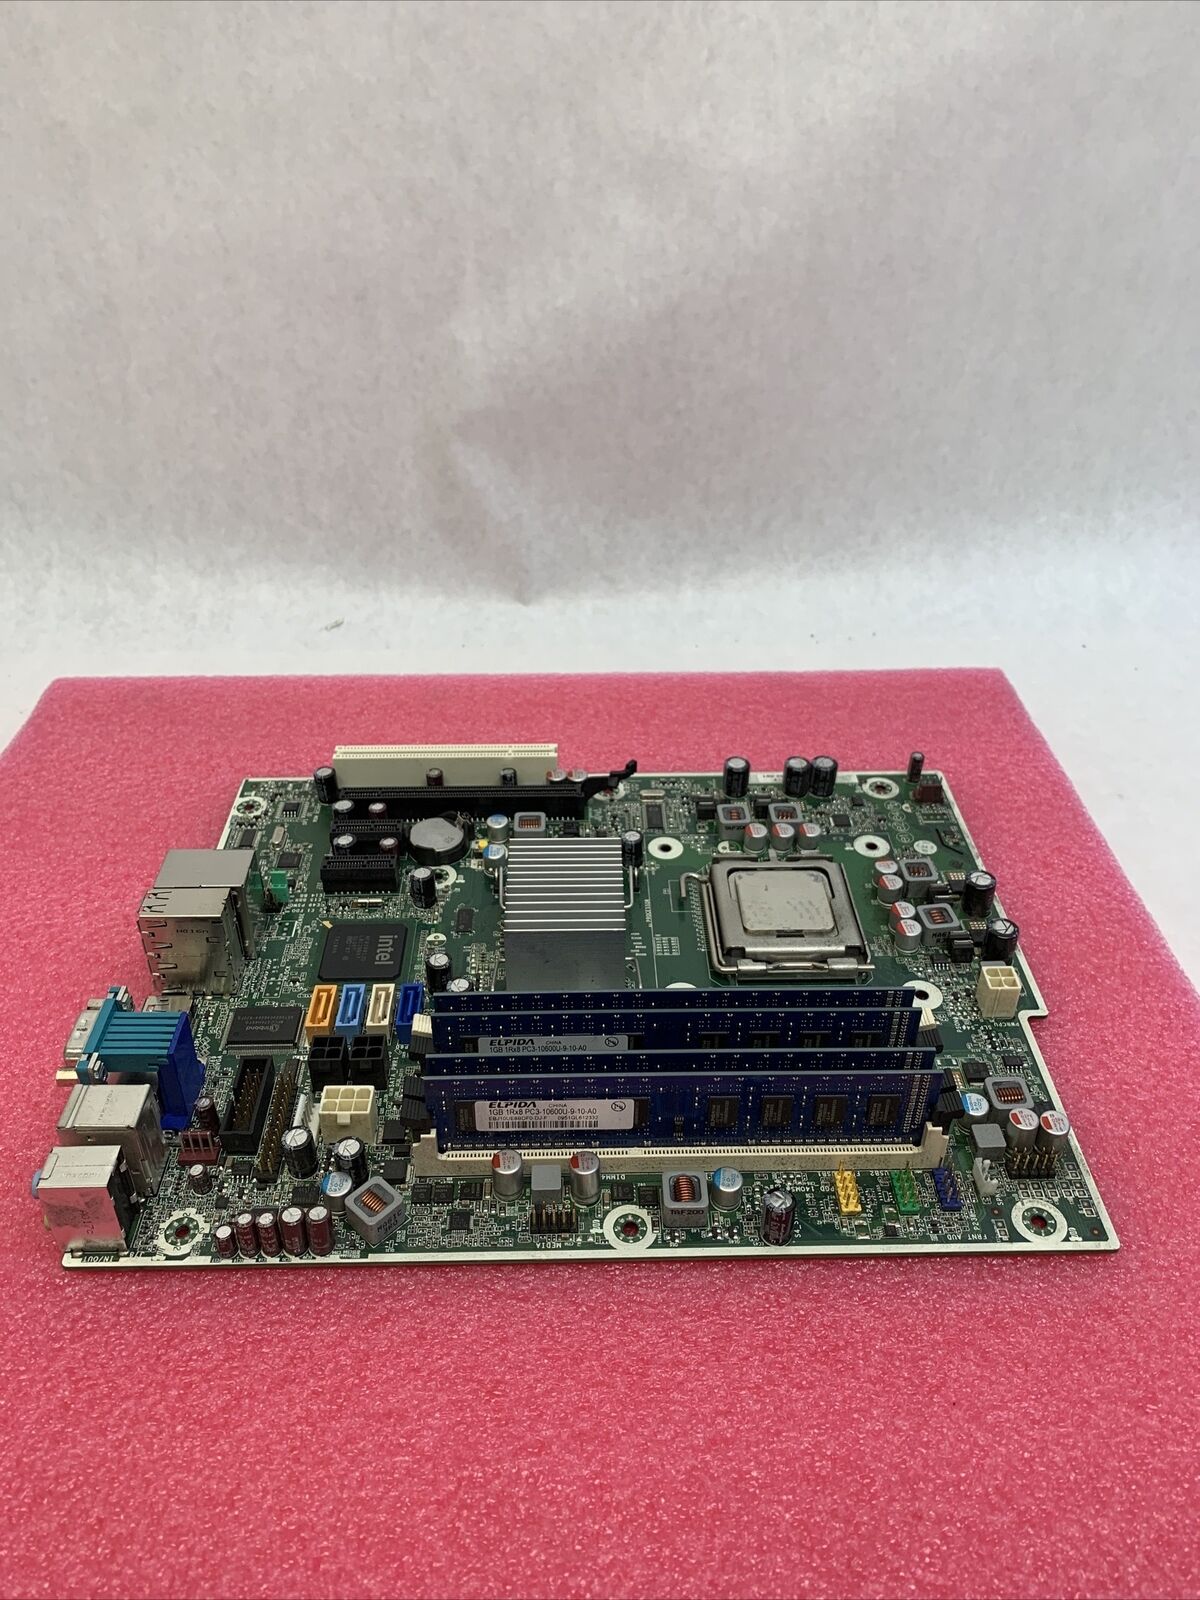 HP Compaq 6000 Pro Motherboard Intel Core 2 Duo E8500 3.16GHz 4GB RAM